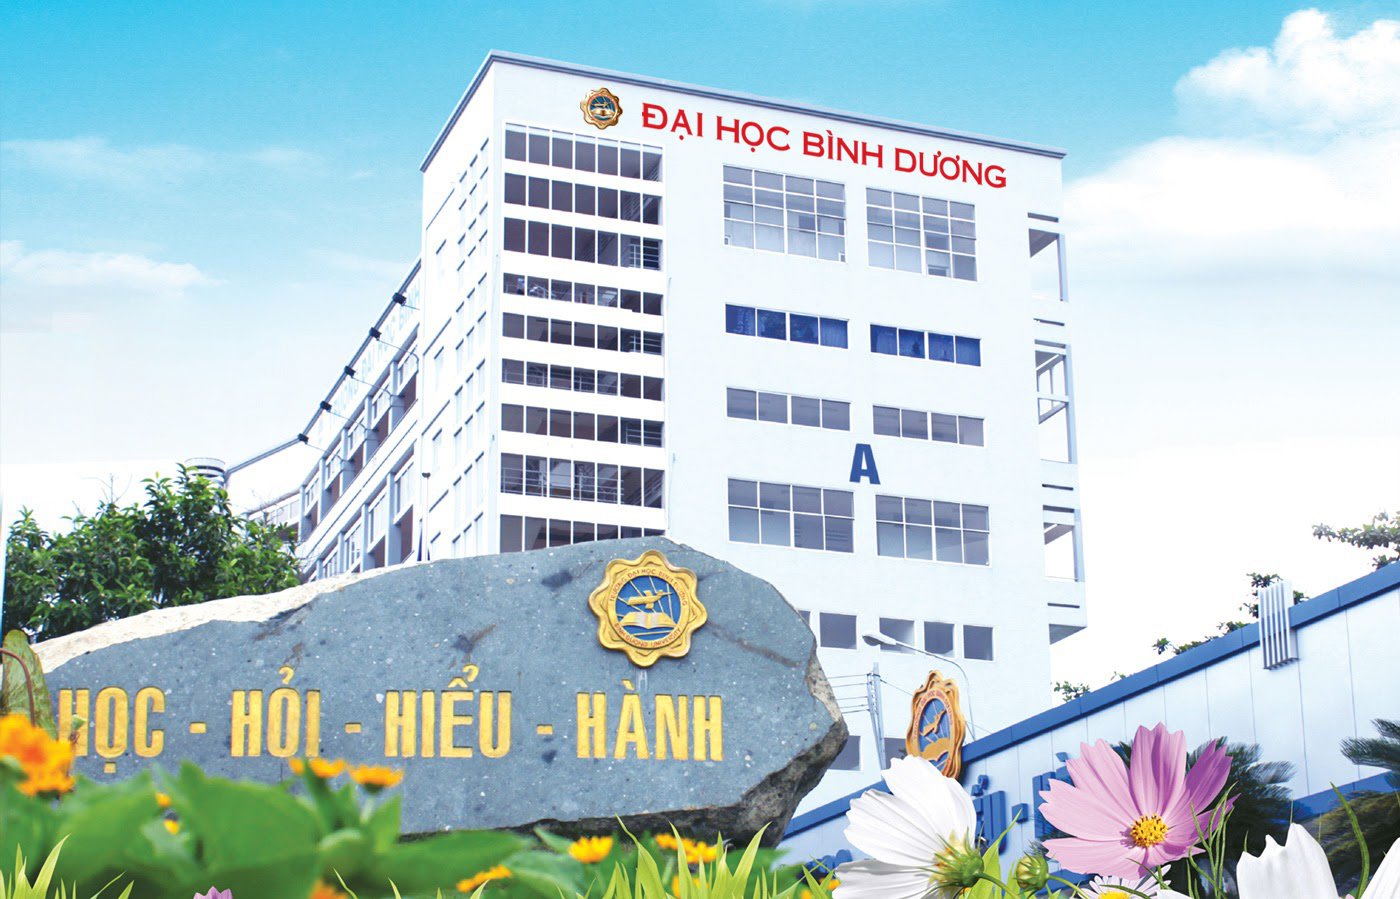 Faculty of Automotive Engineering - Binh Duong University